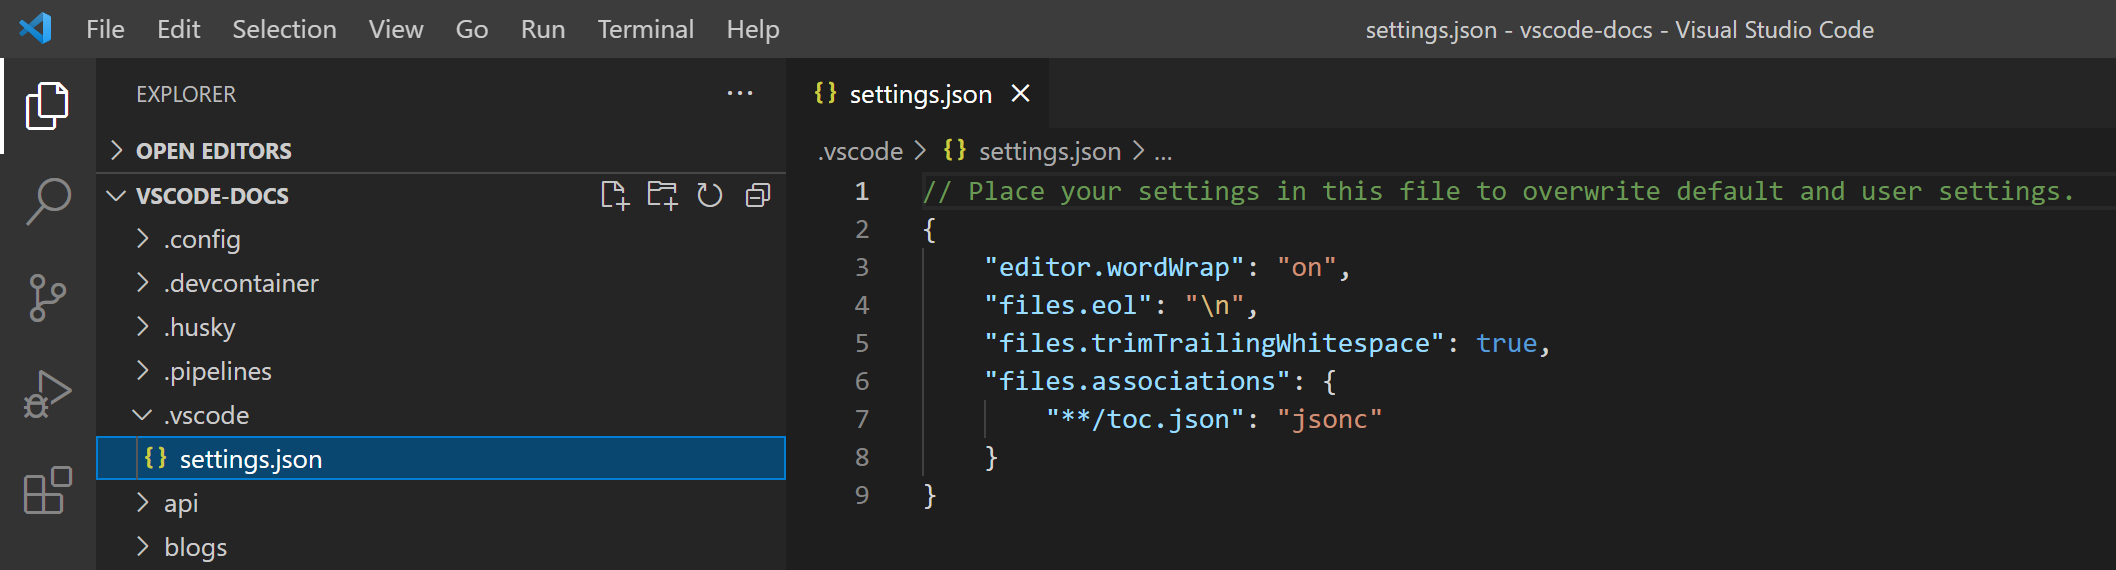 The File Explorer displaying settings.json under the .vscode folder